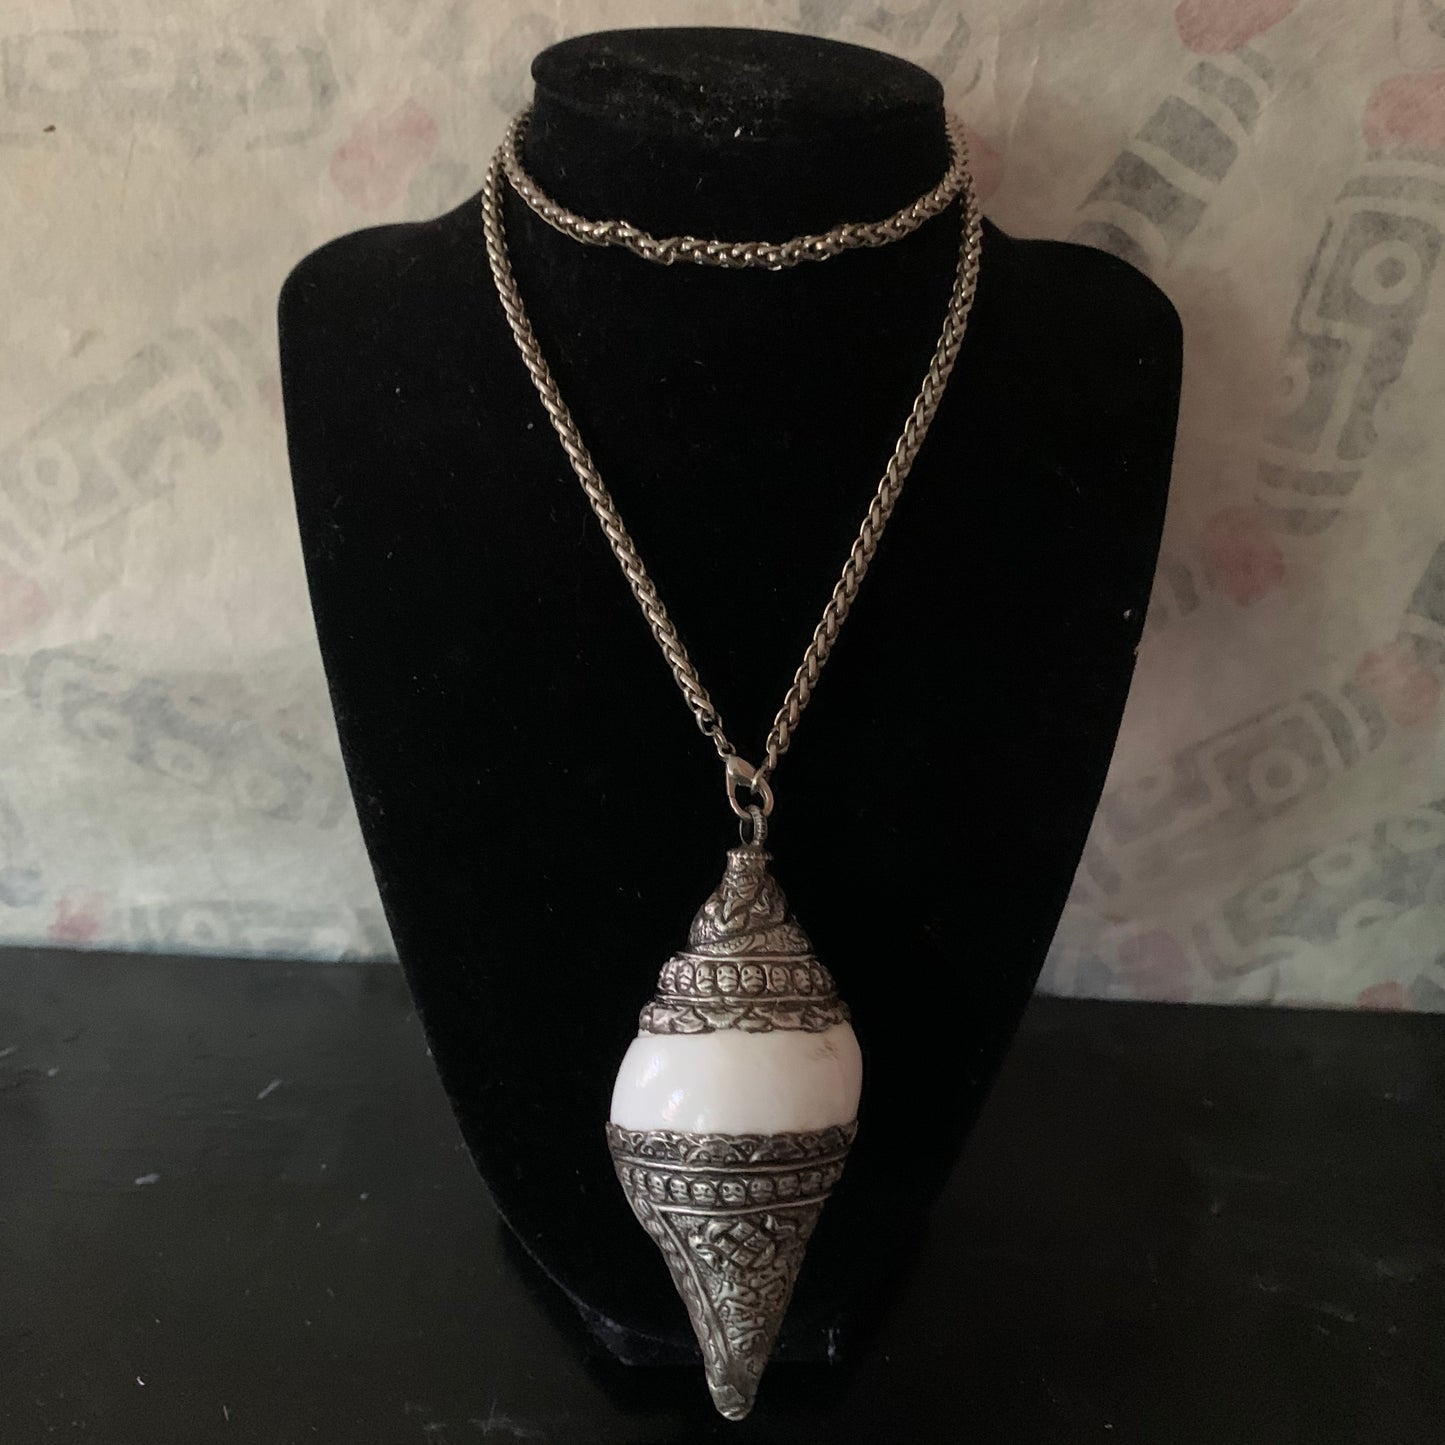 A vintage silver naga conch shell pendant